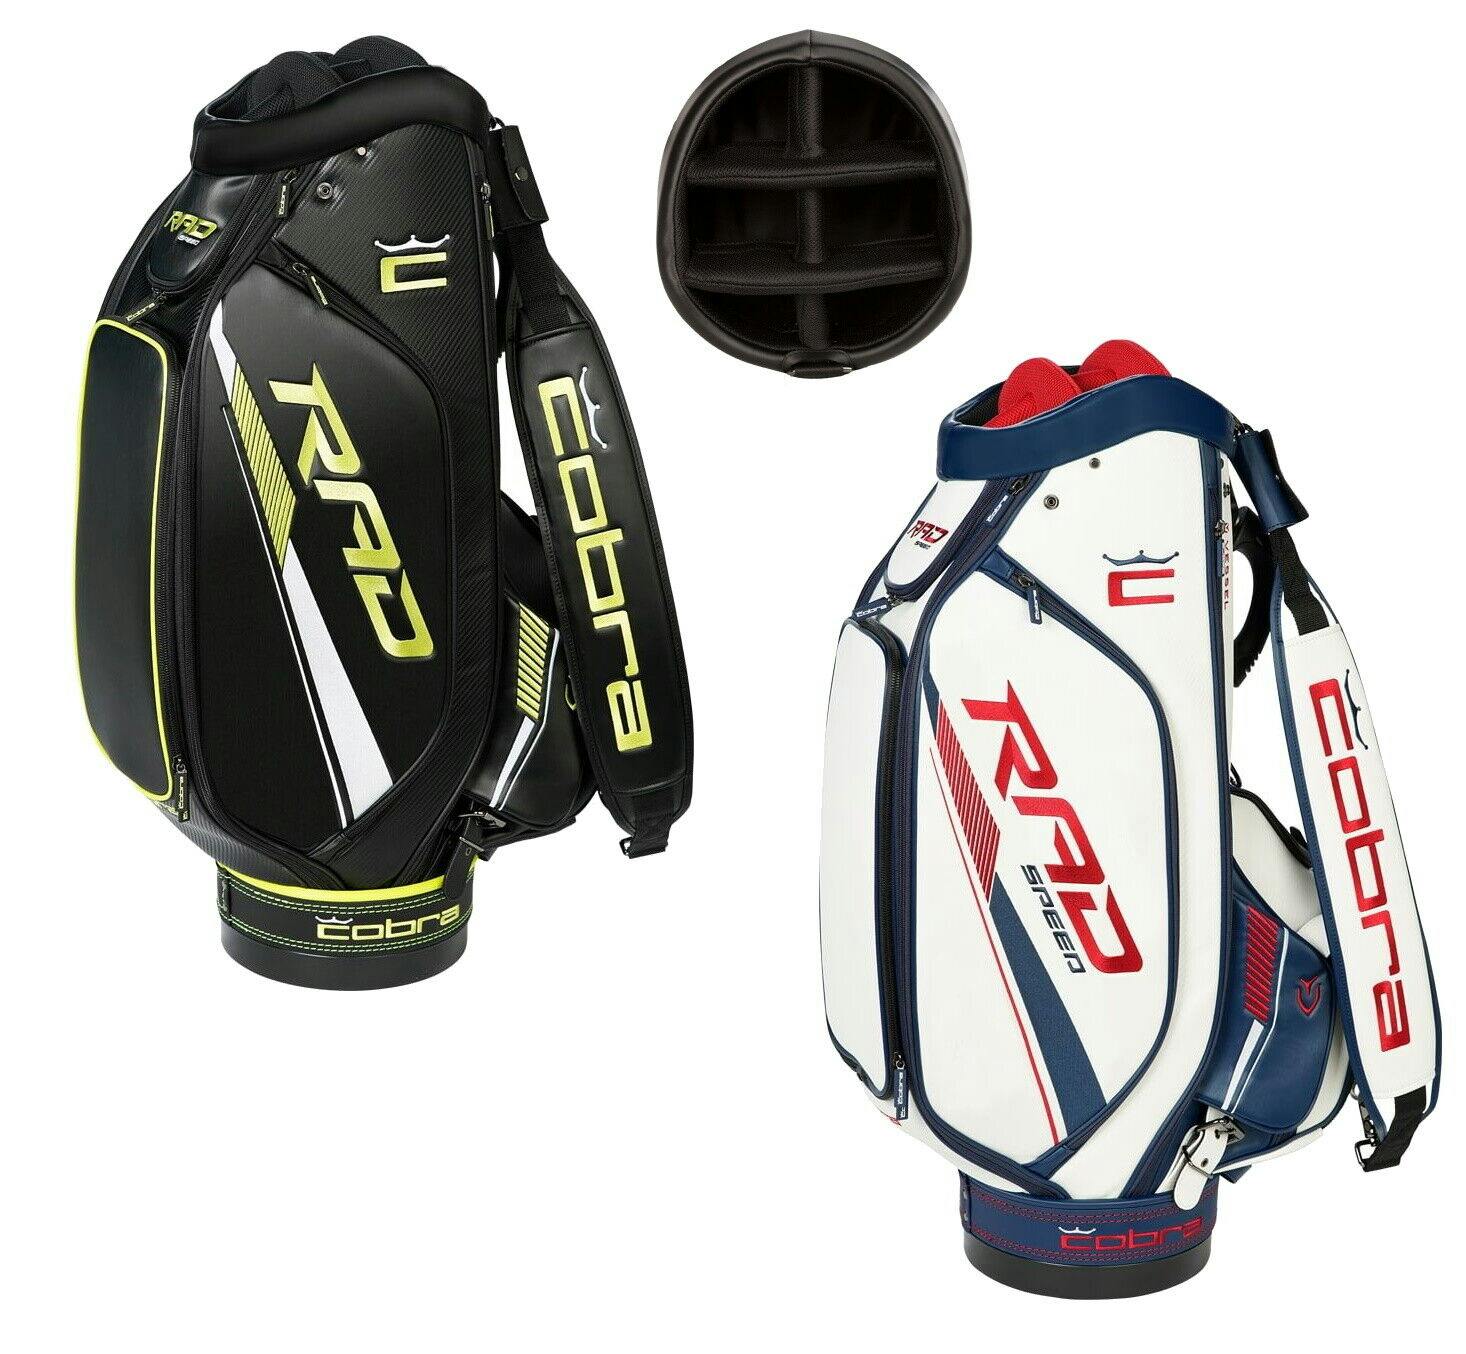 Cobra Radspeed Tour Staff Golf Bag · Bright White